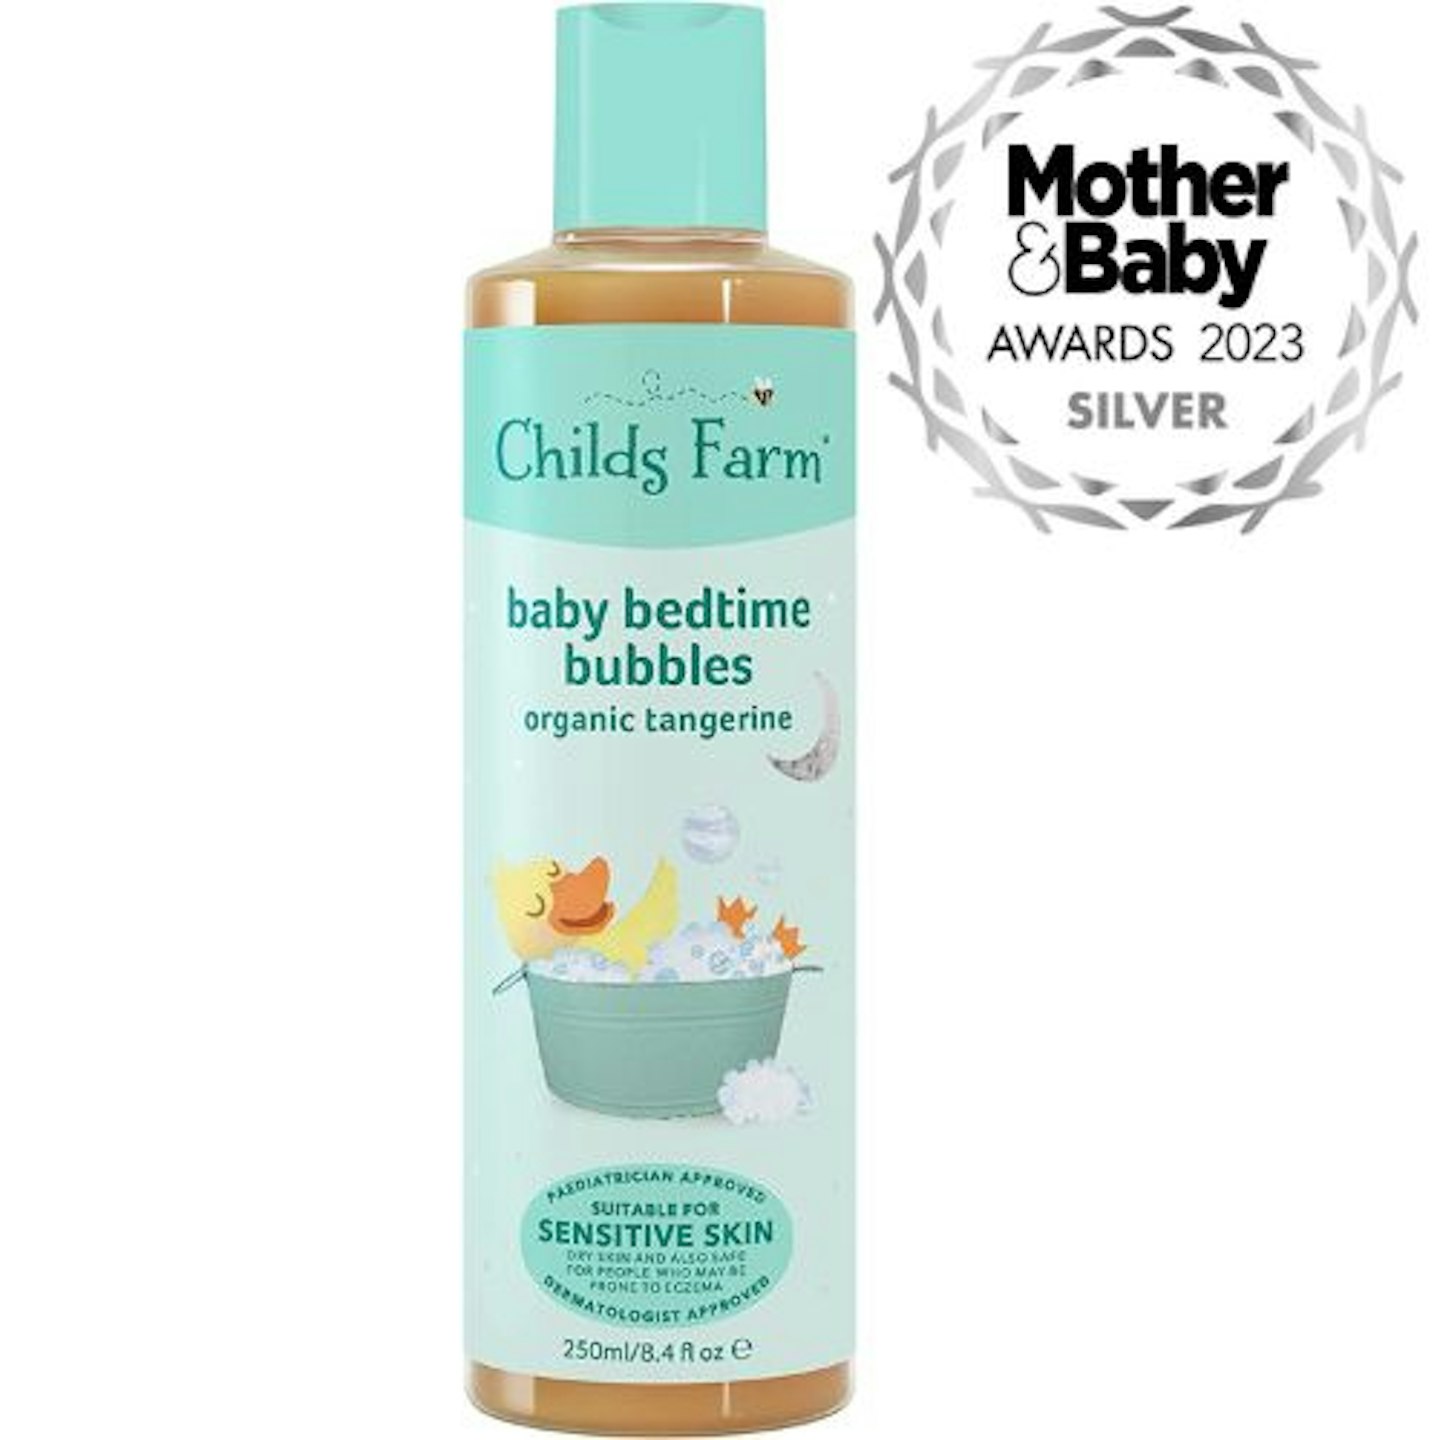 Childs Farm Baby Bedtime Bubbles Organic Tangerine